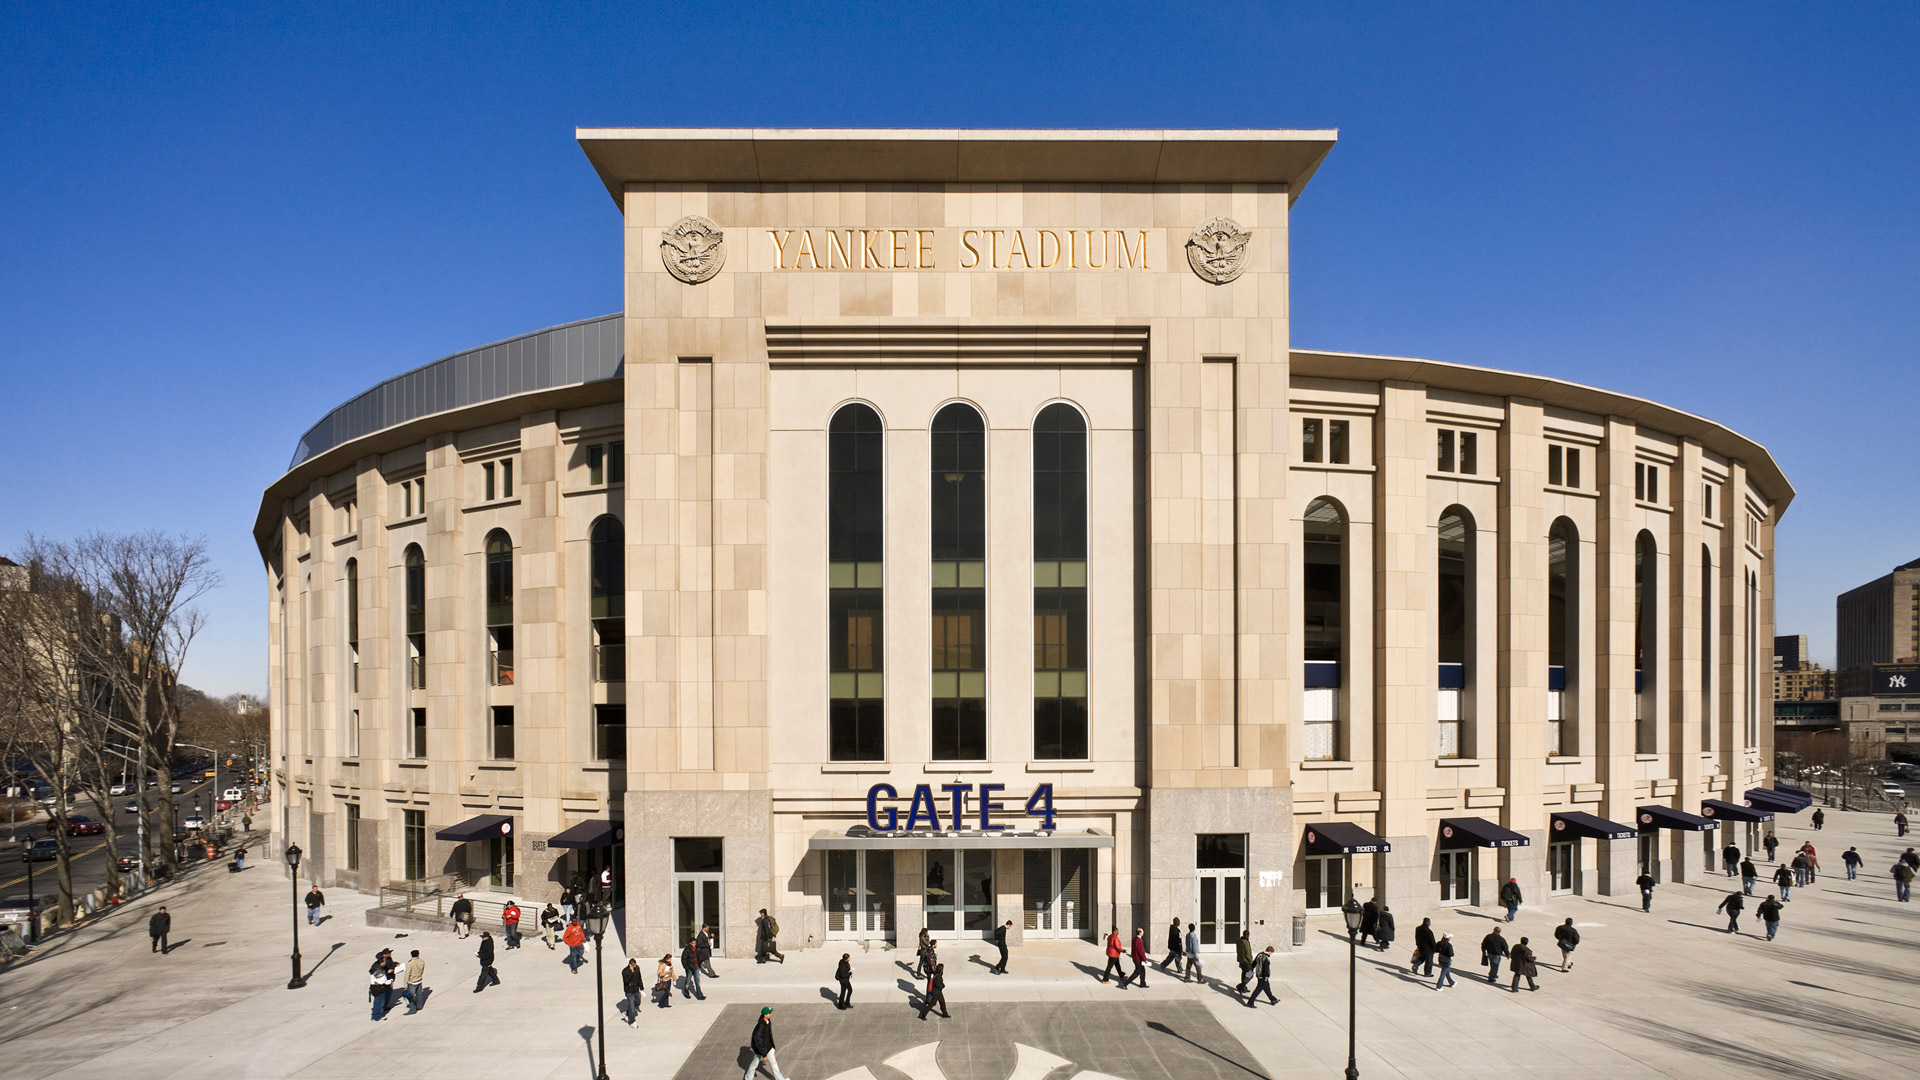 Design Tweaks Help Old MLB Ballparks Make Pitch for New Fans - Bloomberg